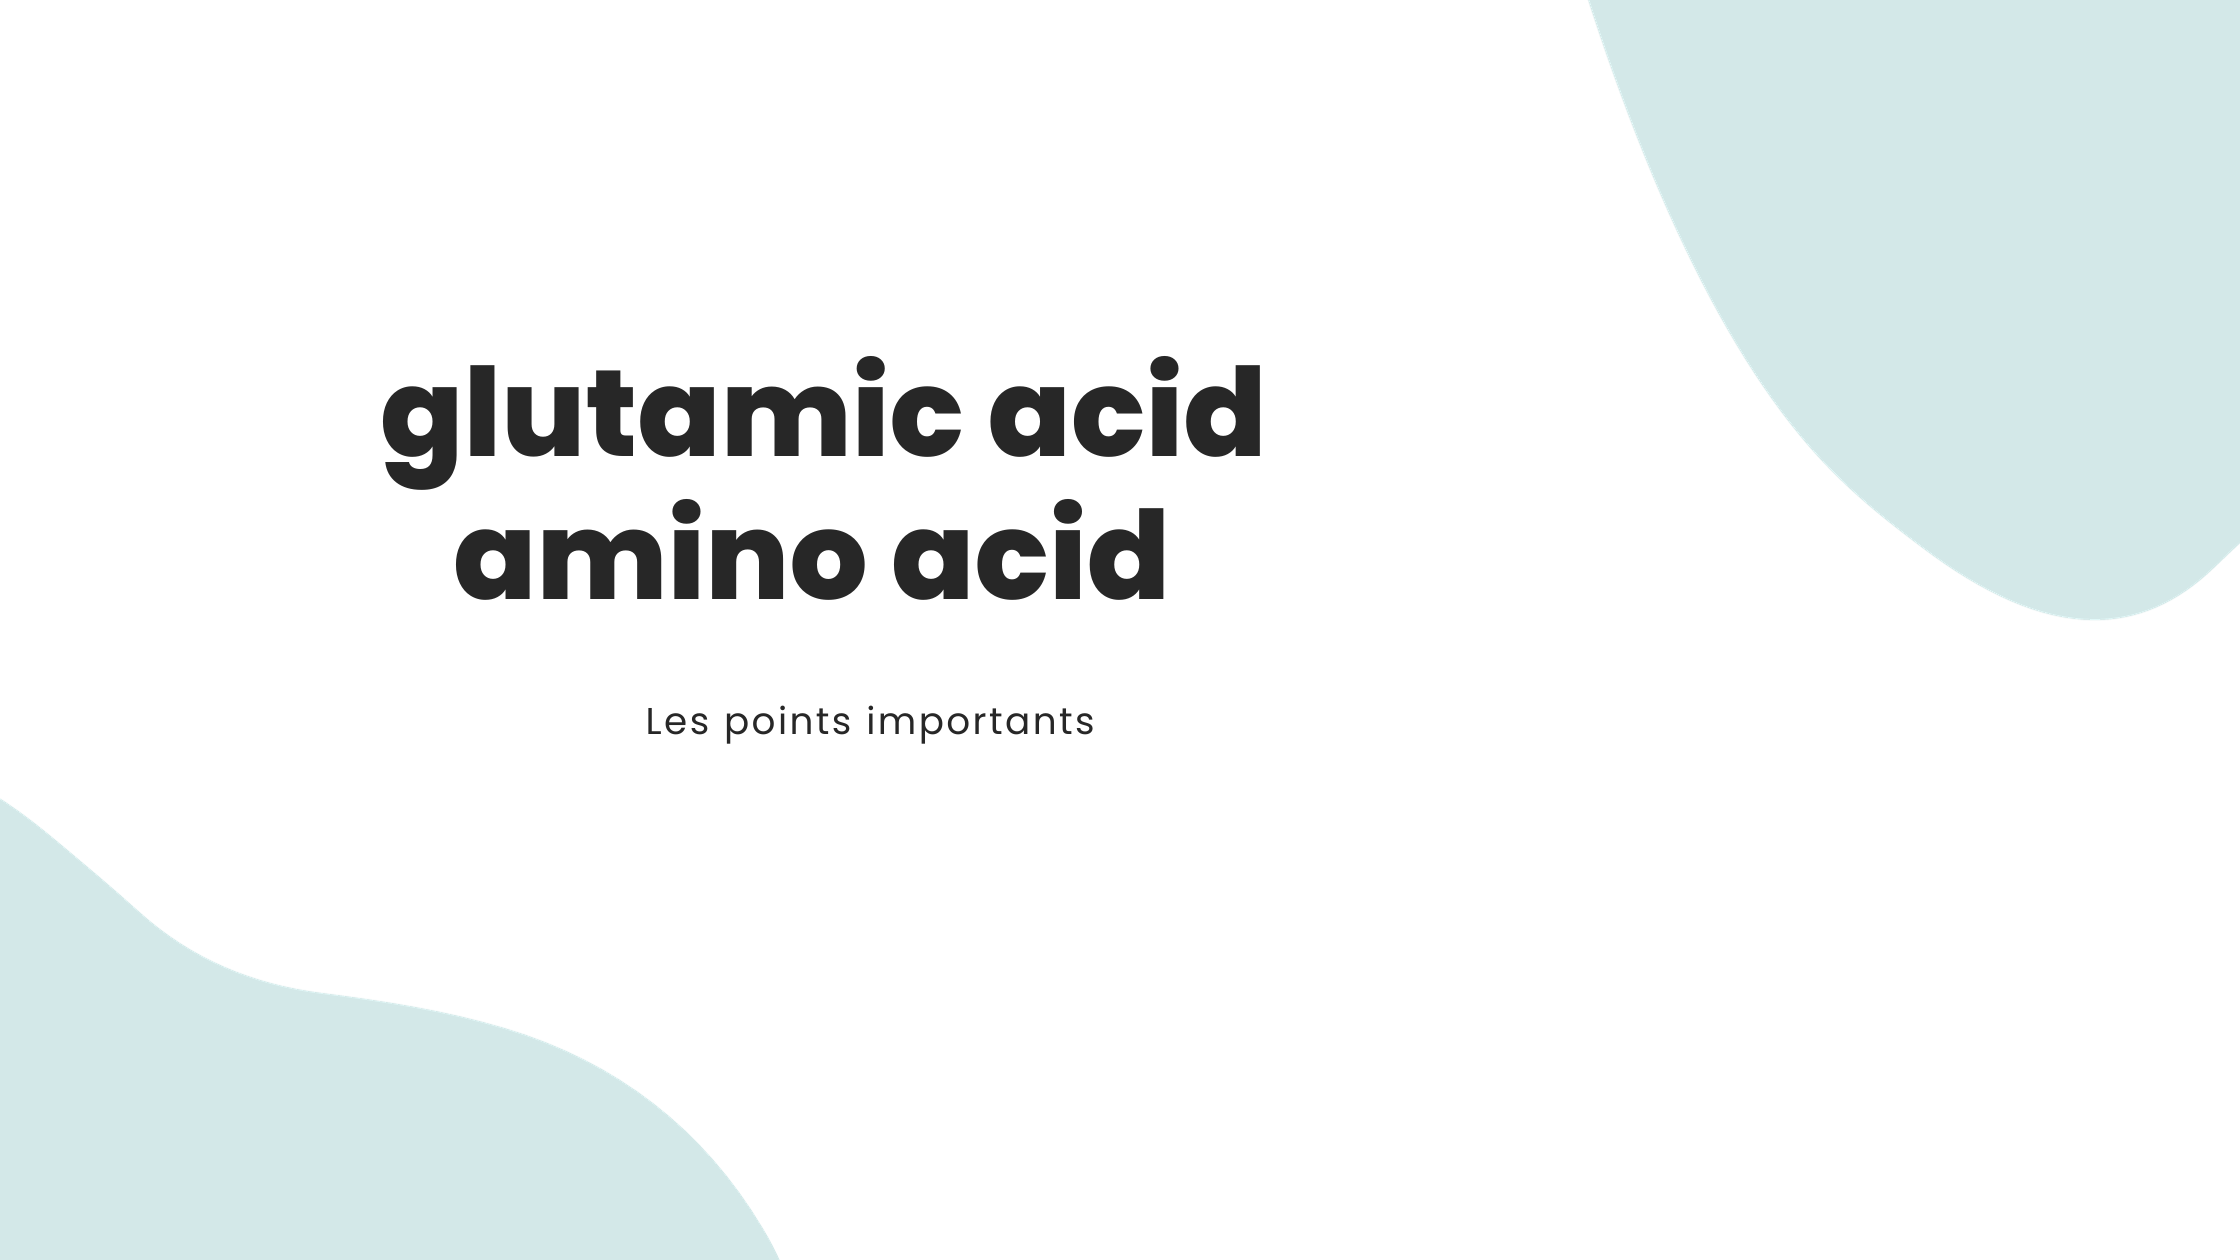 glutamic acid amino acid | Les points importants